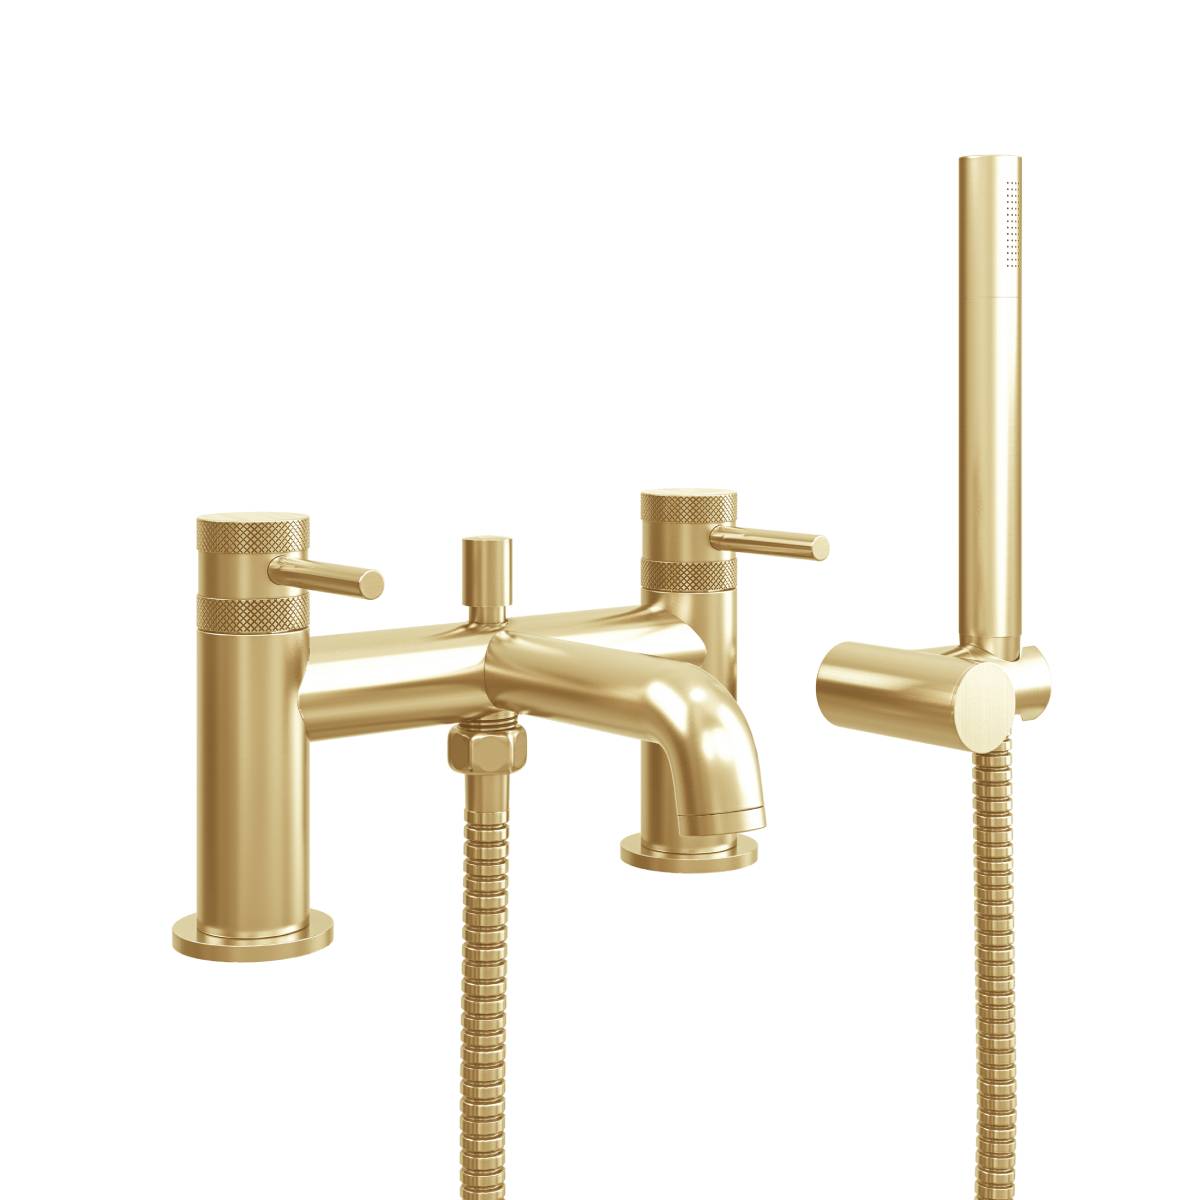 Eliseo Ricci Exclusiv Bath Shower Mixer - Brushed Brass (12997)